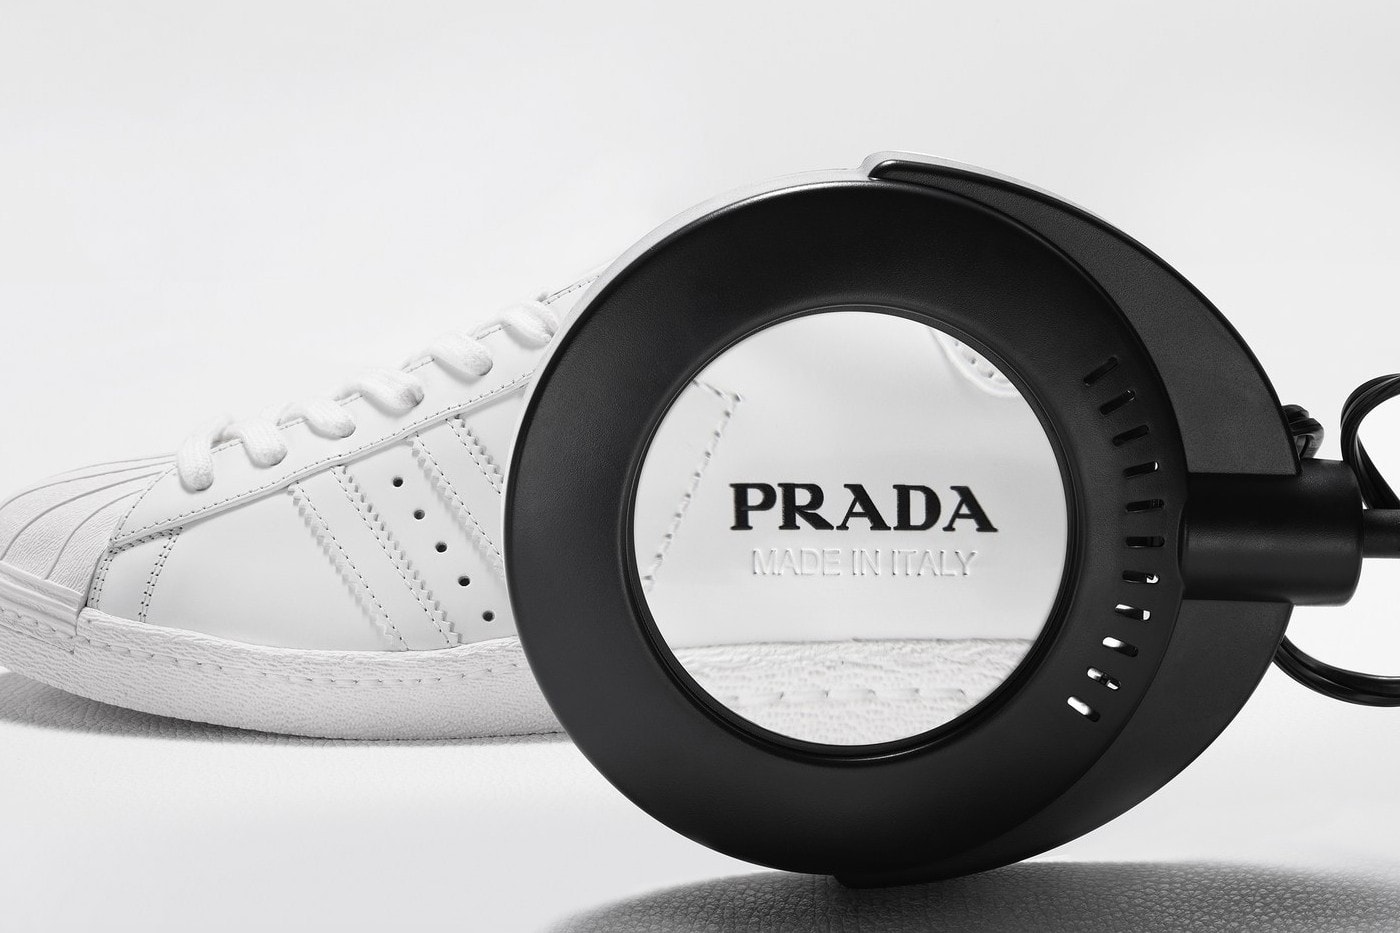 Prada x adidas Originals Superstar Sneaker Collaboration